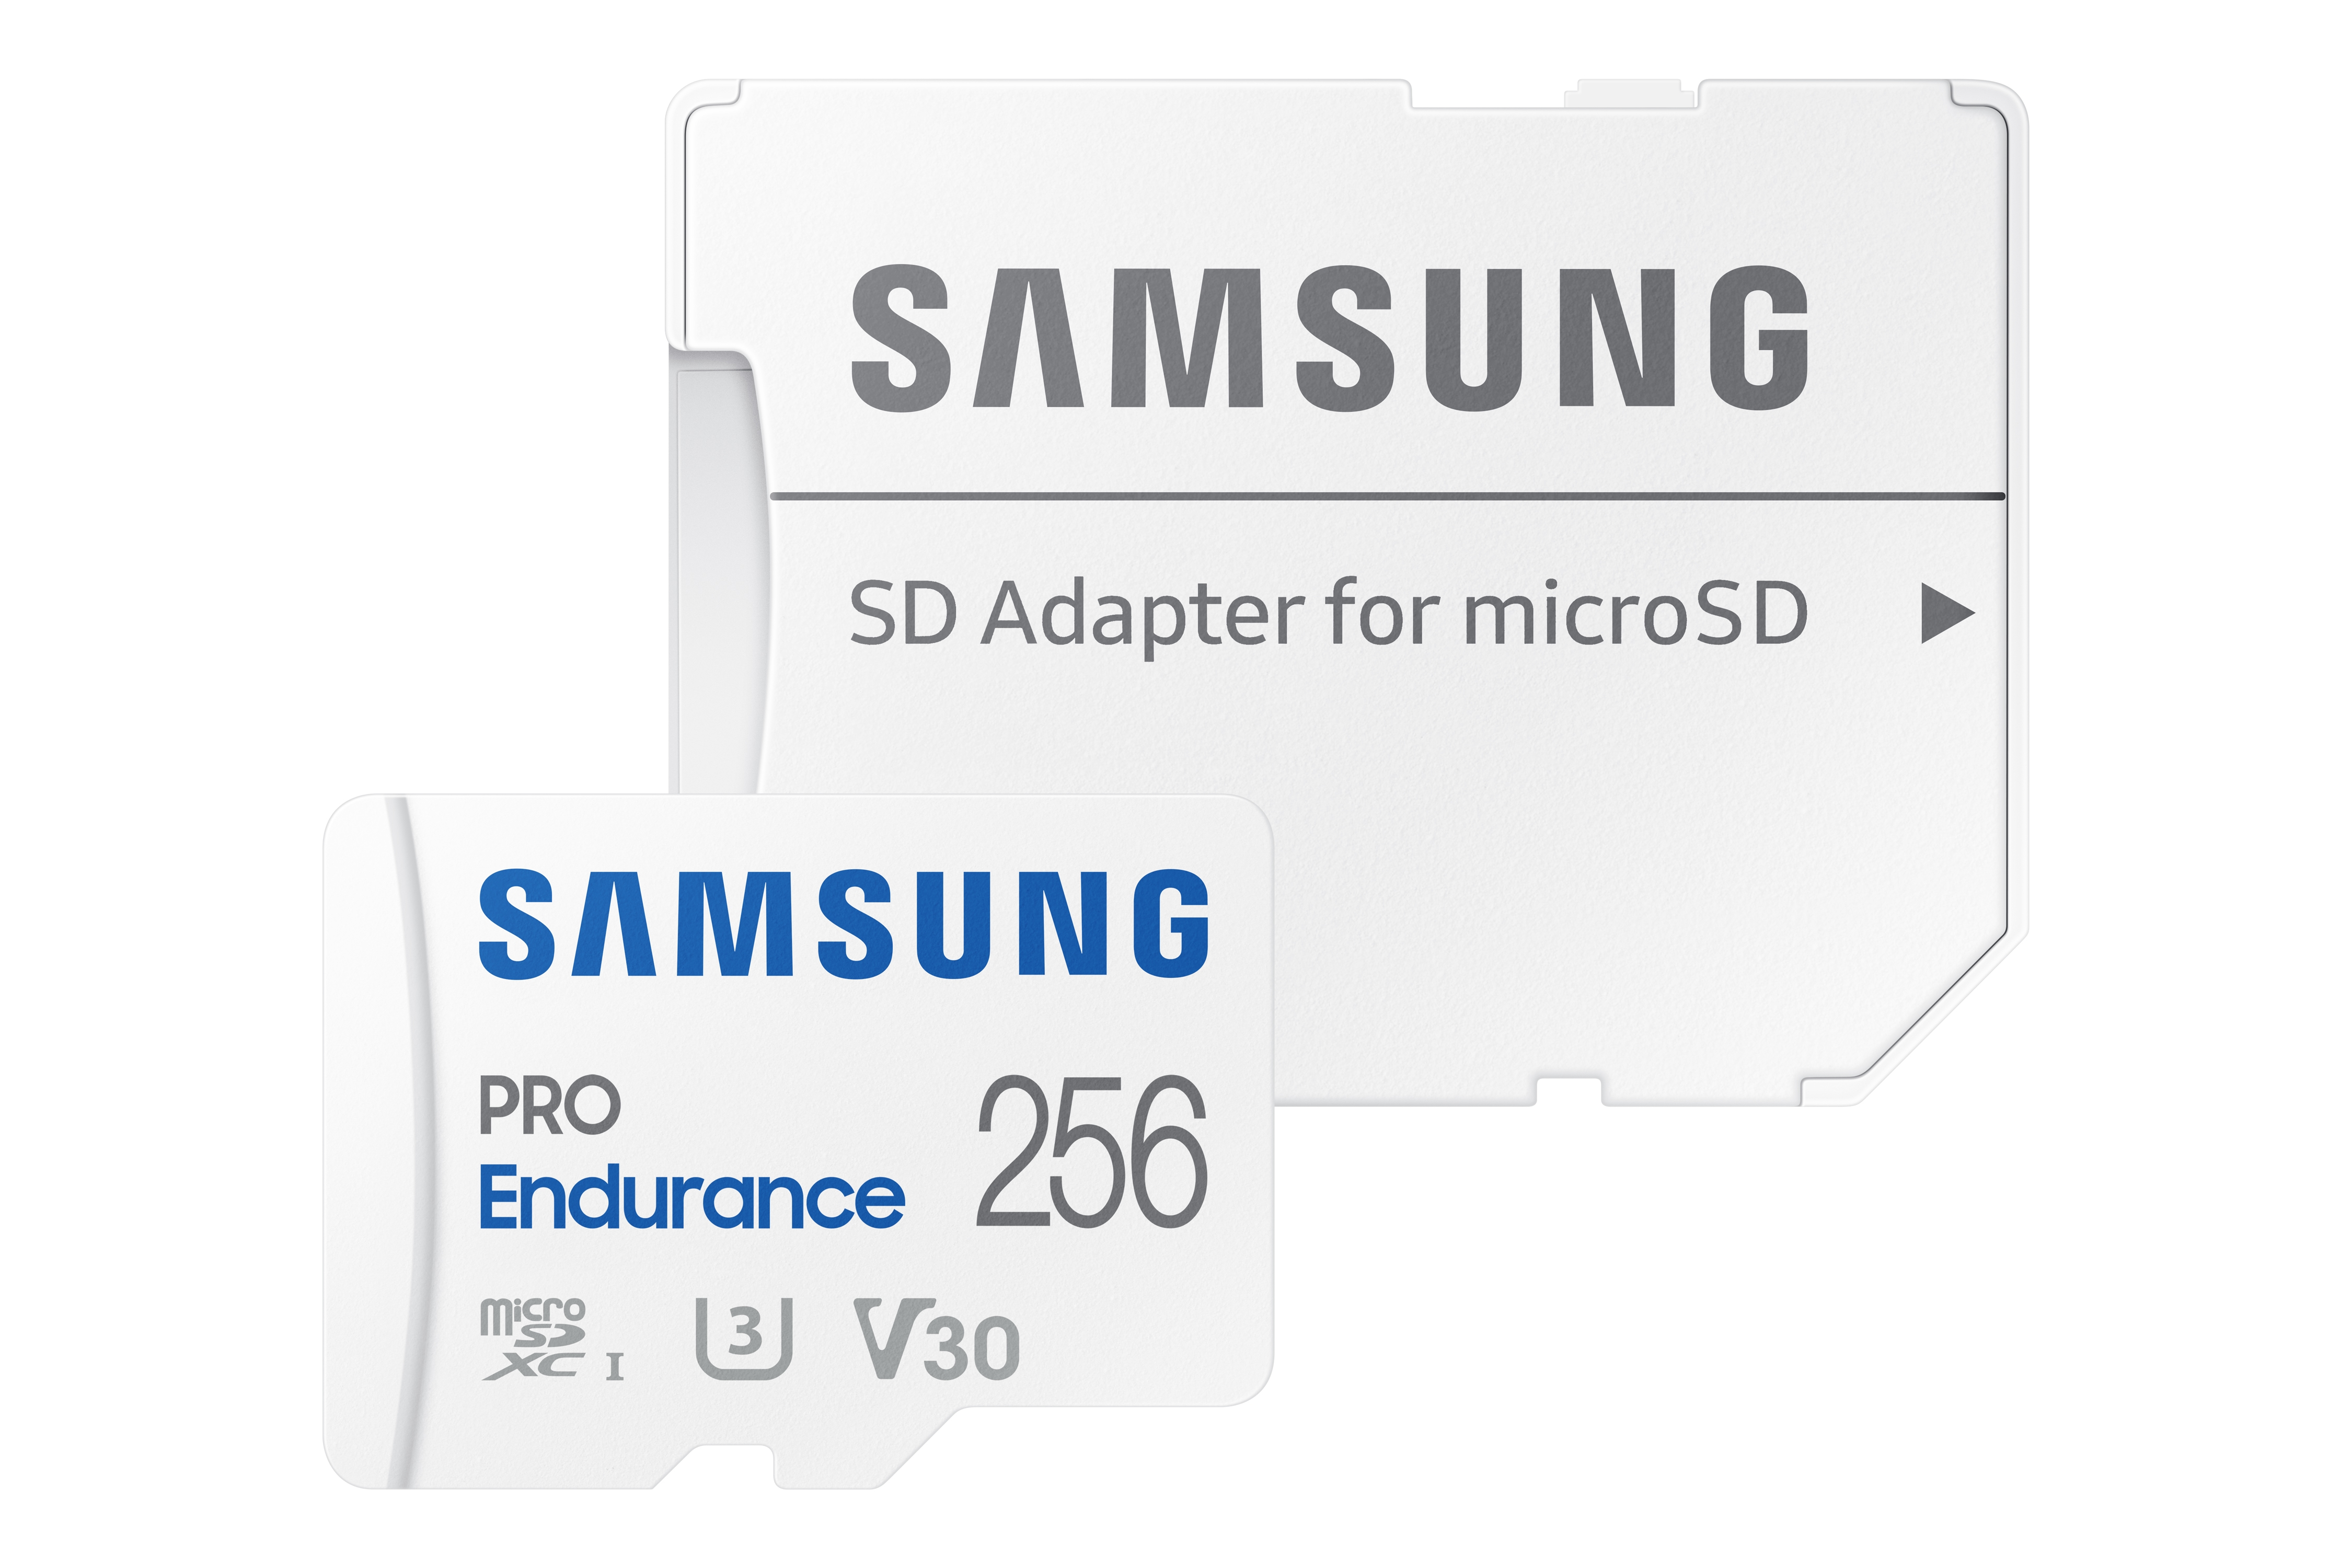 Carte microSDXC SanDisk Extreme 1To V30 A2